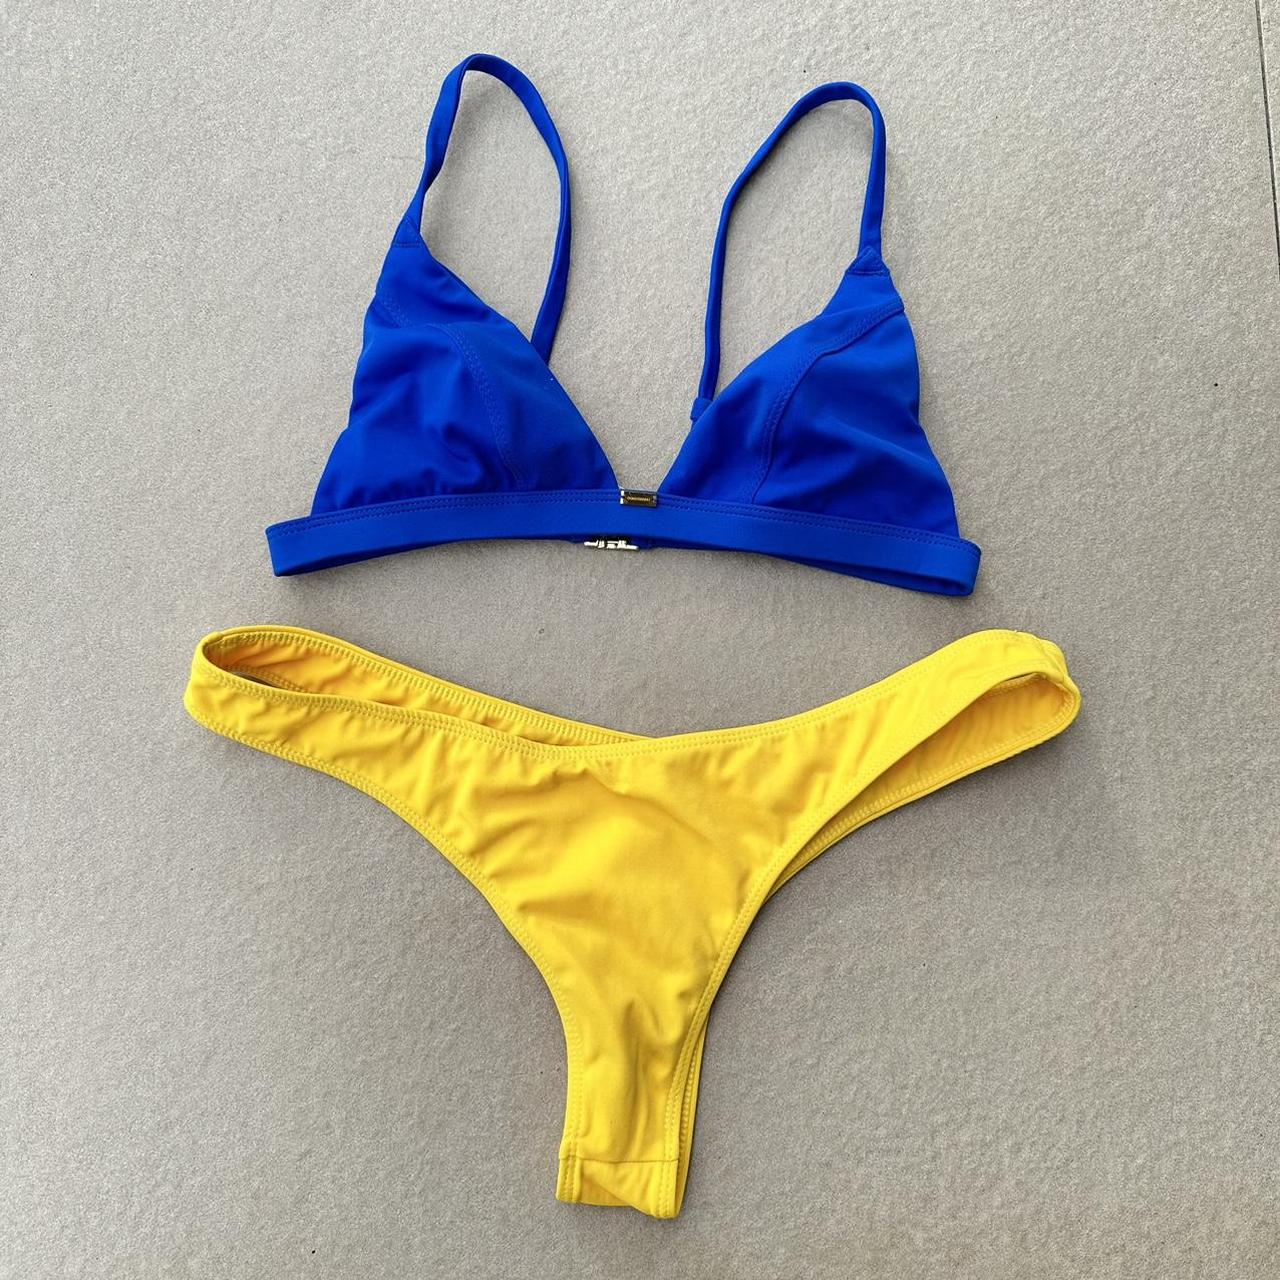 Gooseberry Seaside yellow and blue bikini set - Depop